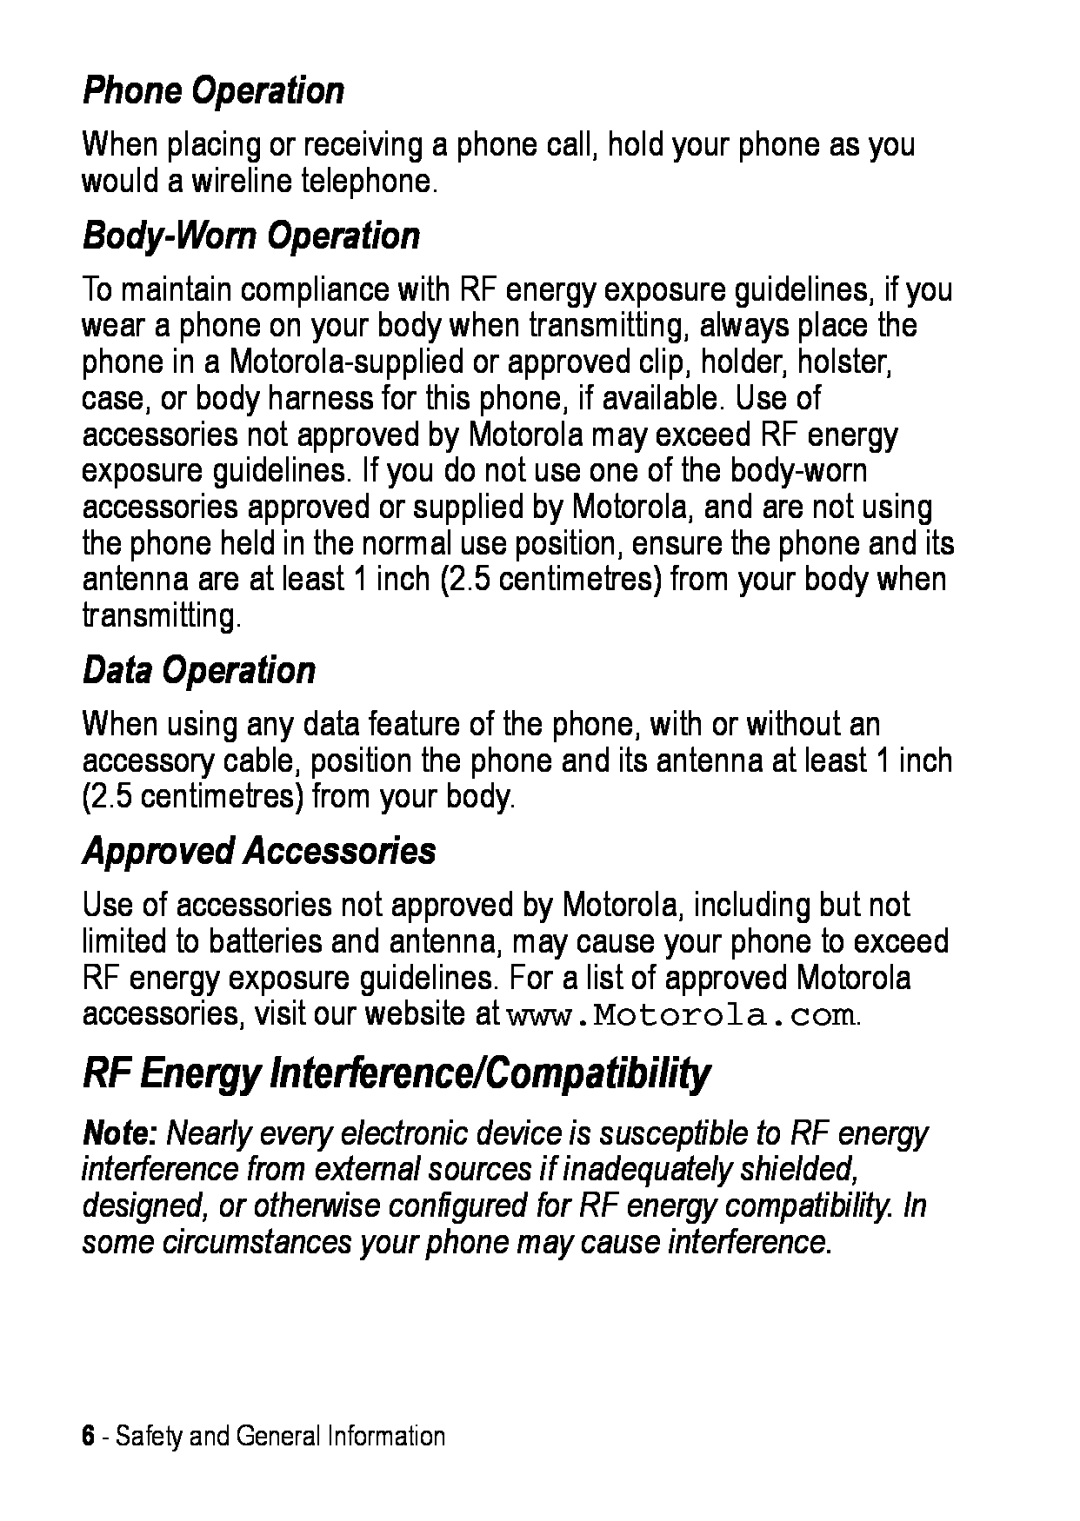 Motorola C390 manual RF Energy Interference/Compatibility, Phone Operation, Body-Worn Operation, Data Operation 